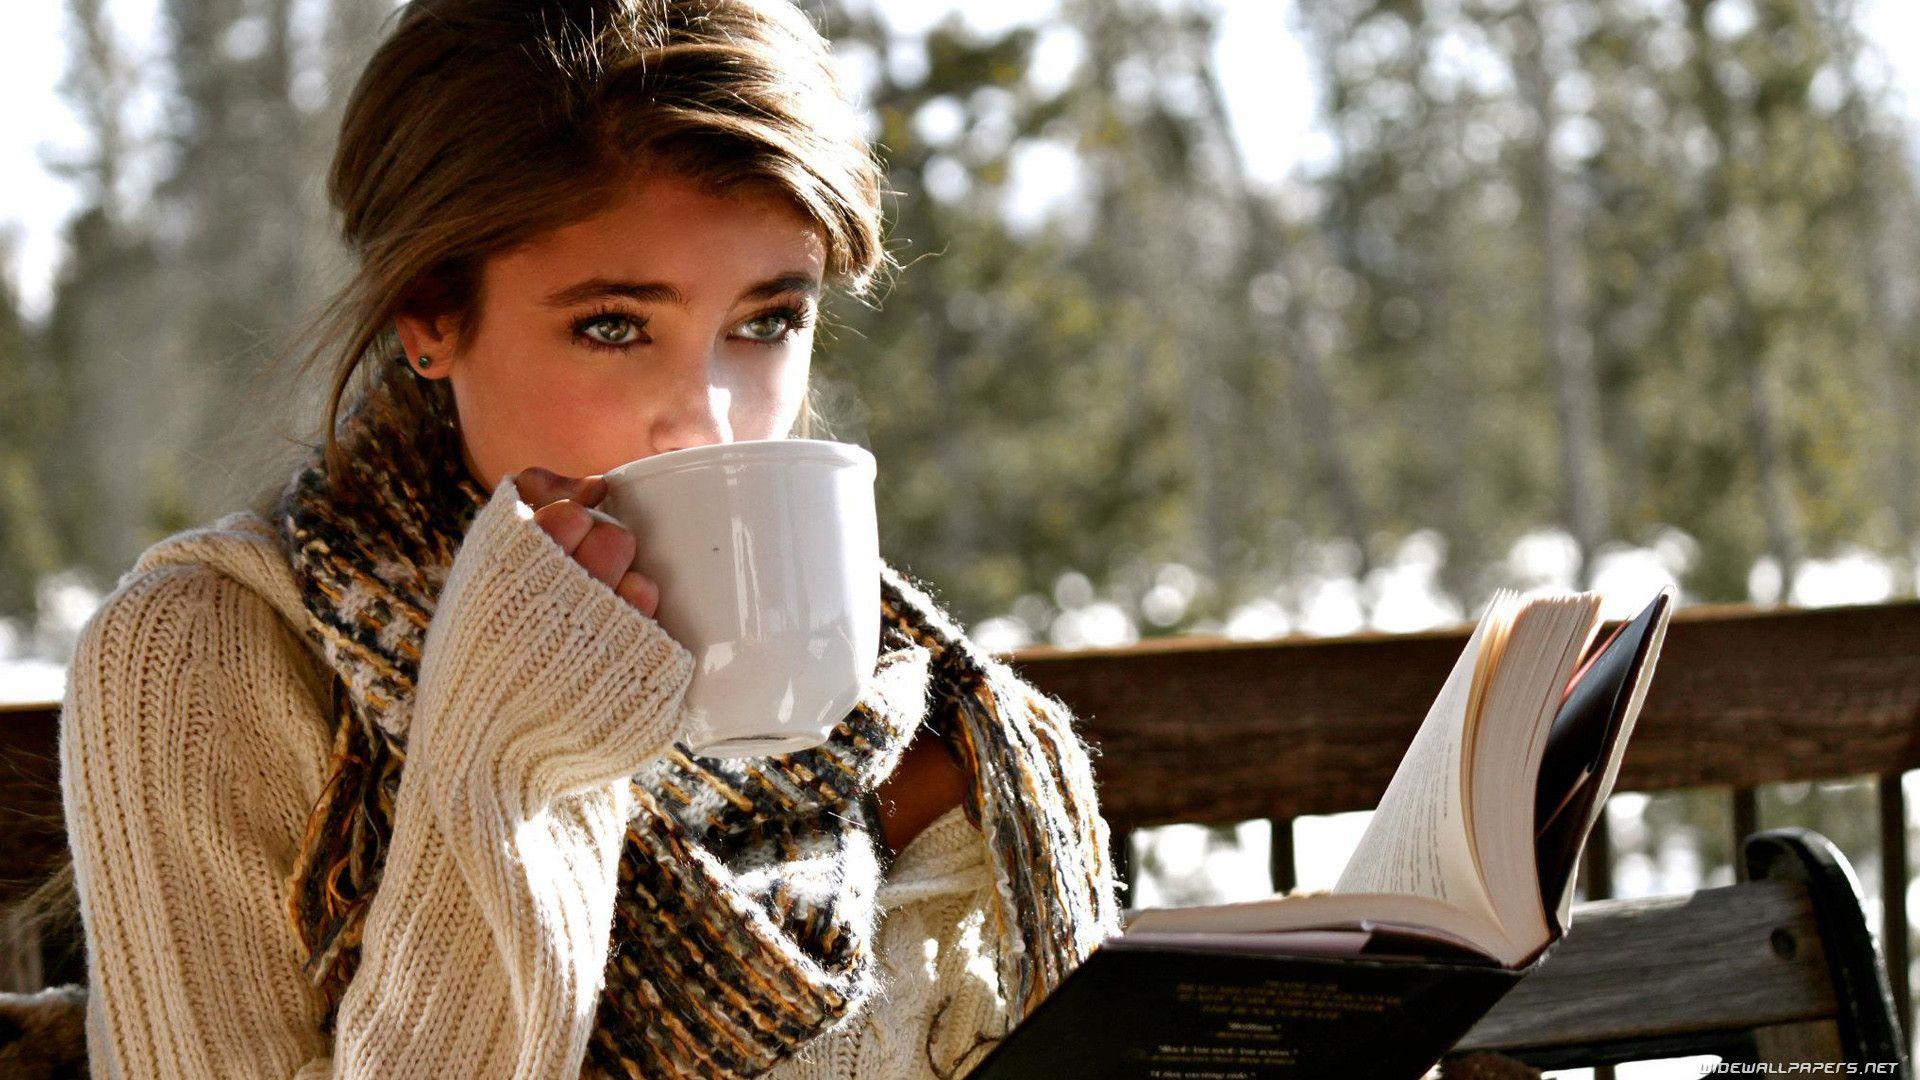 model, #women, #women outdoors, #Taylor Hill, #winter, #books